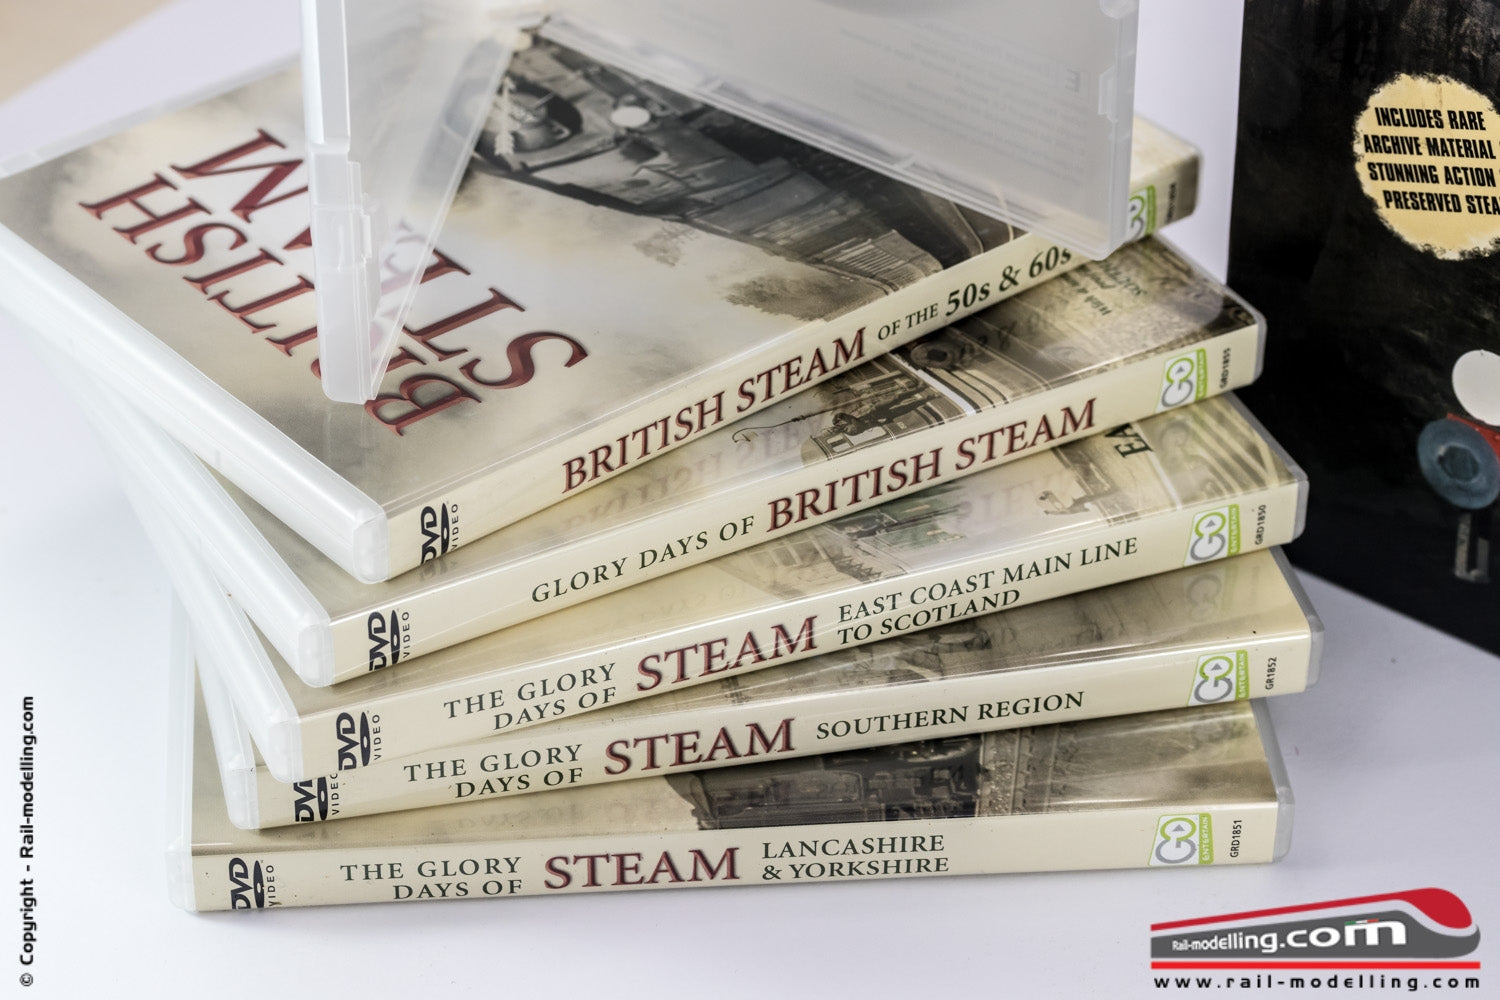 Collana 6 DVD THE BEST OF STEAM TRAINS - Storia delle locomotive a vapore inglesi